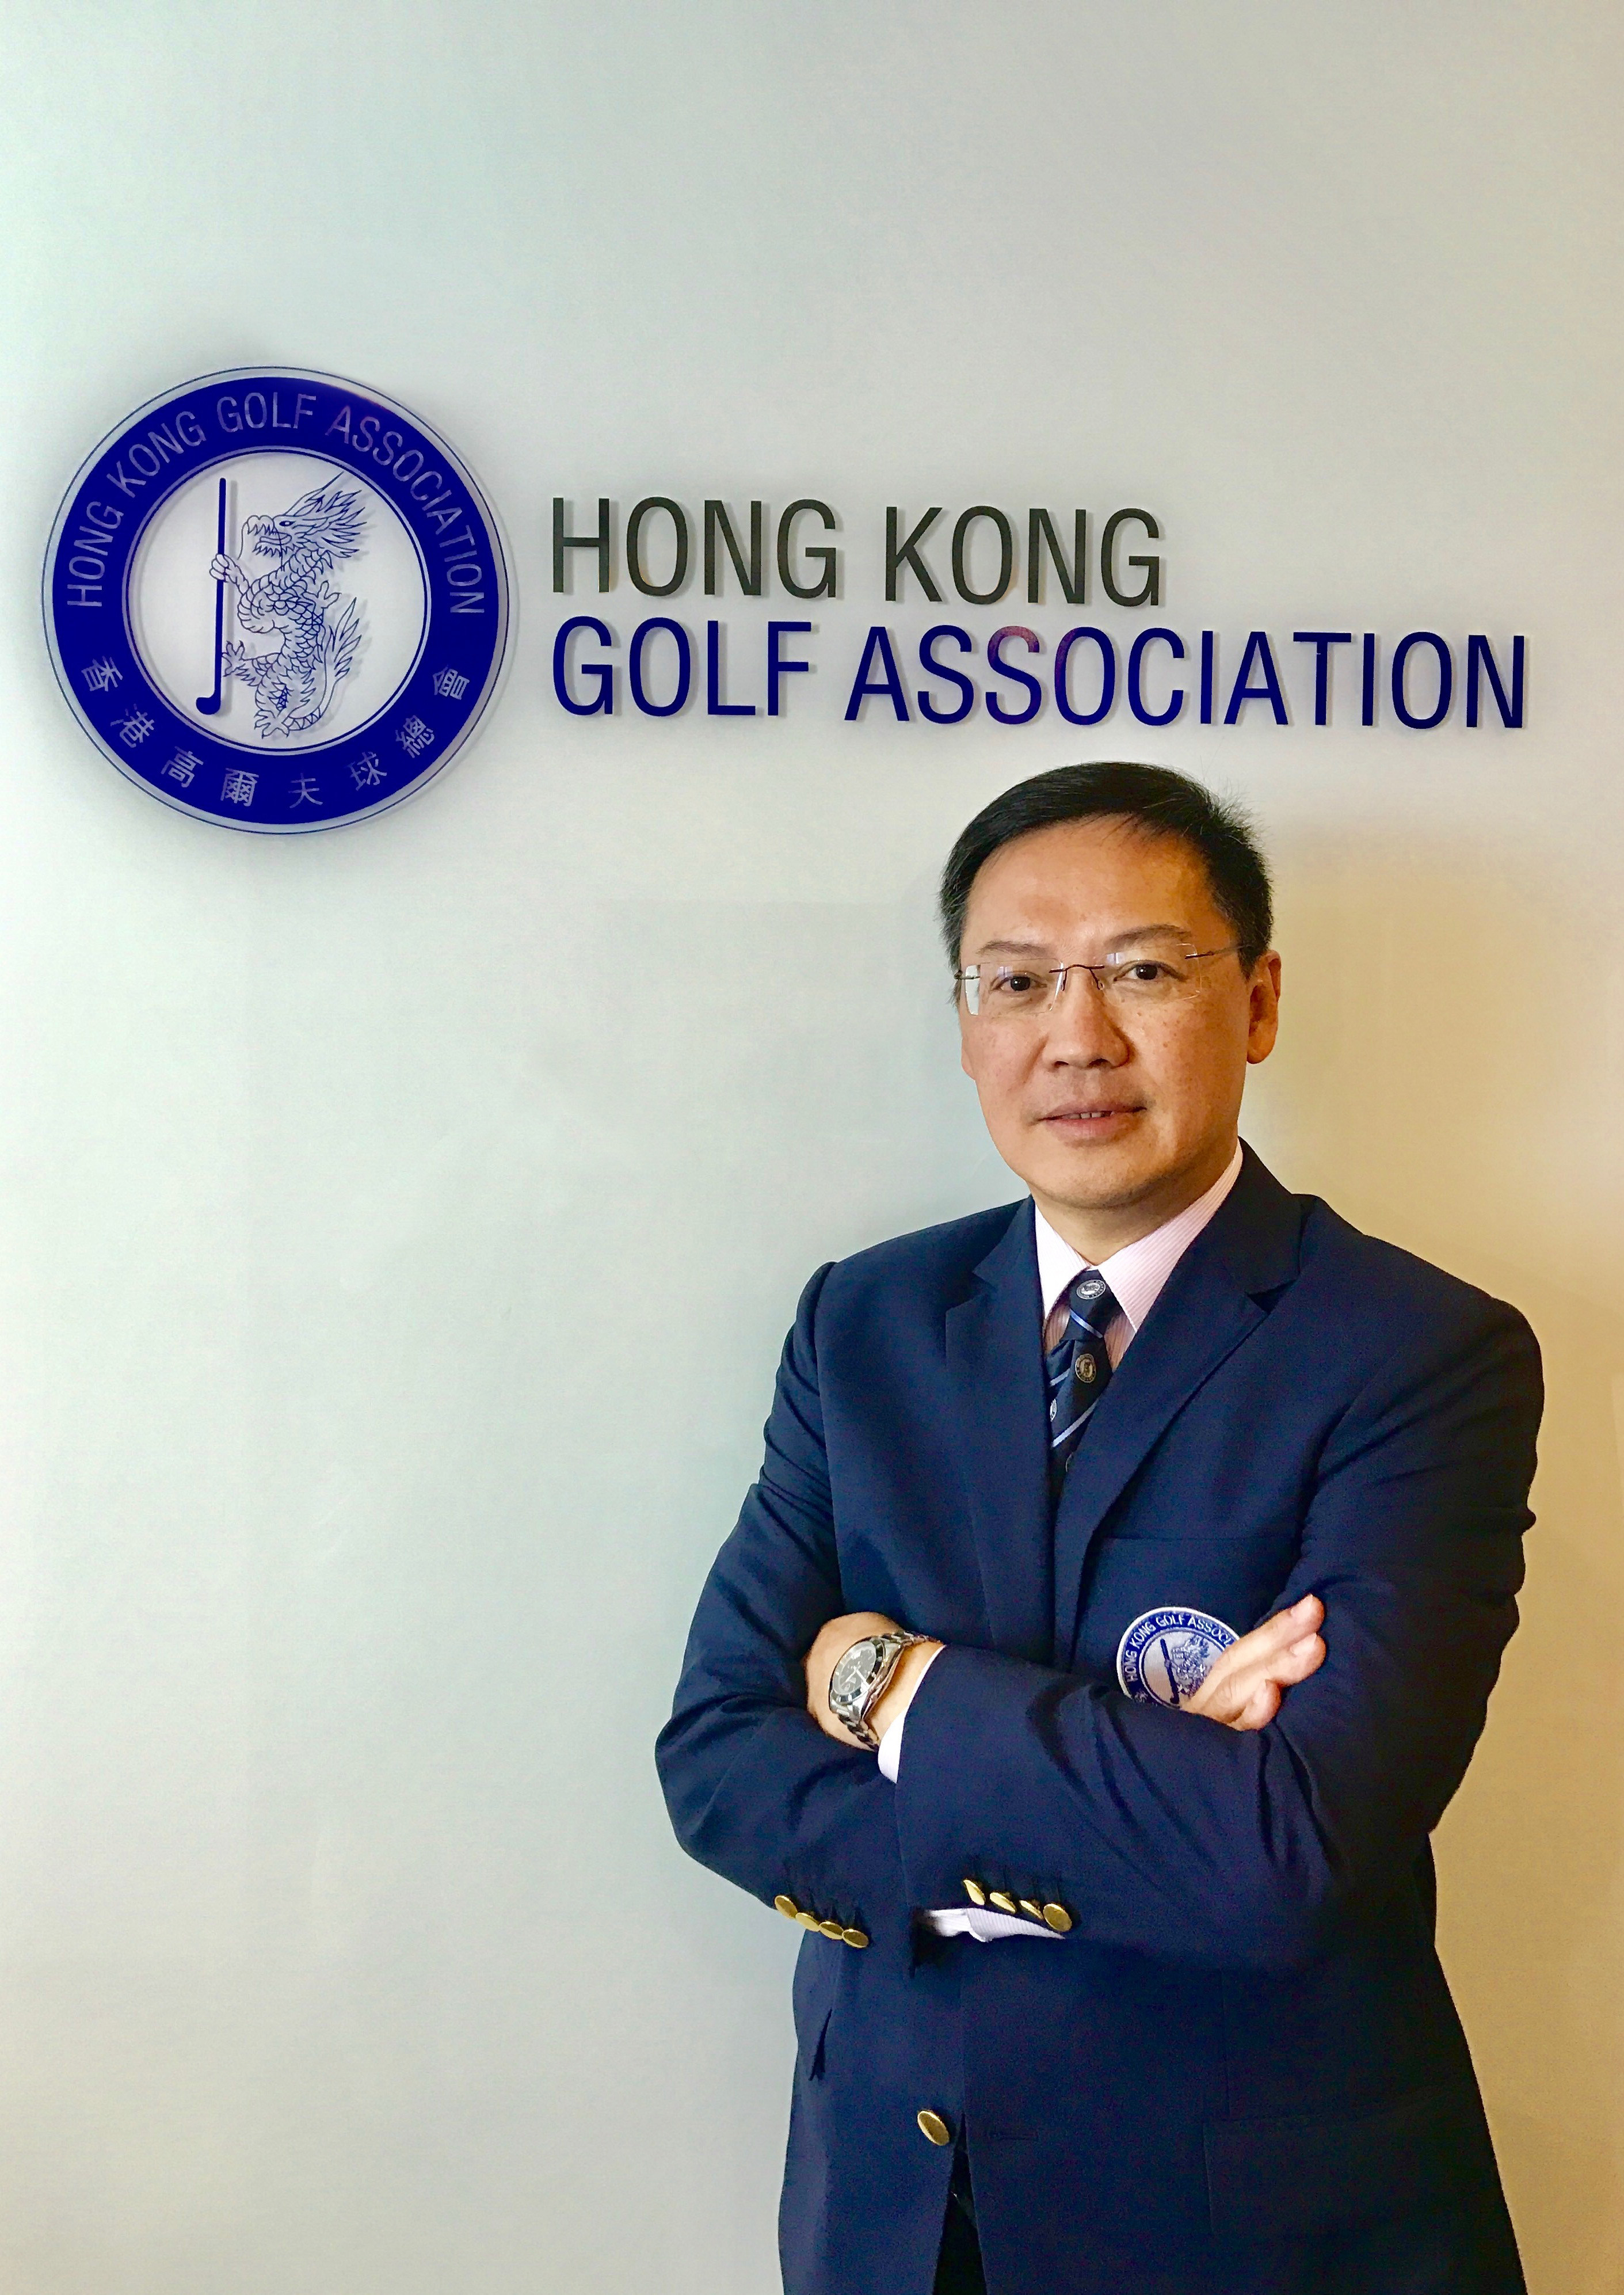 Hong Kong Golf Association chief executive Danny Lai. Photo: Handout